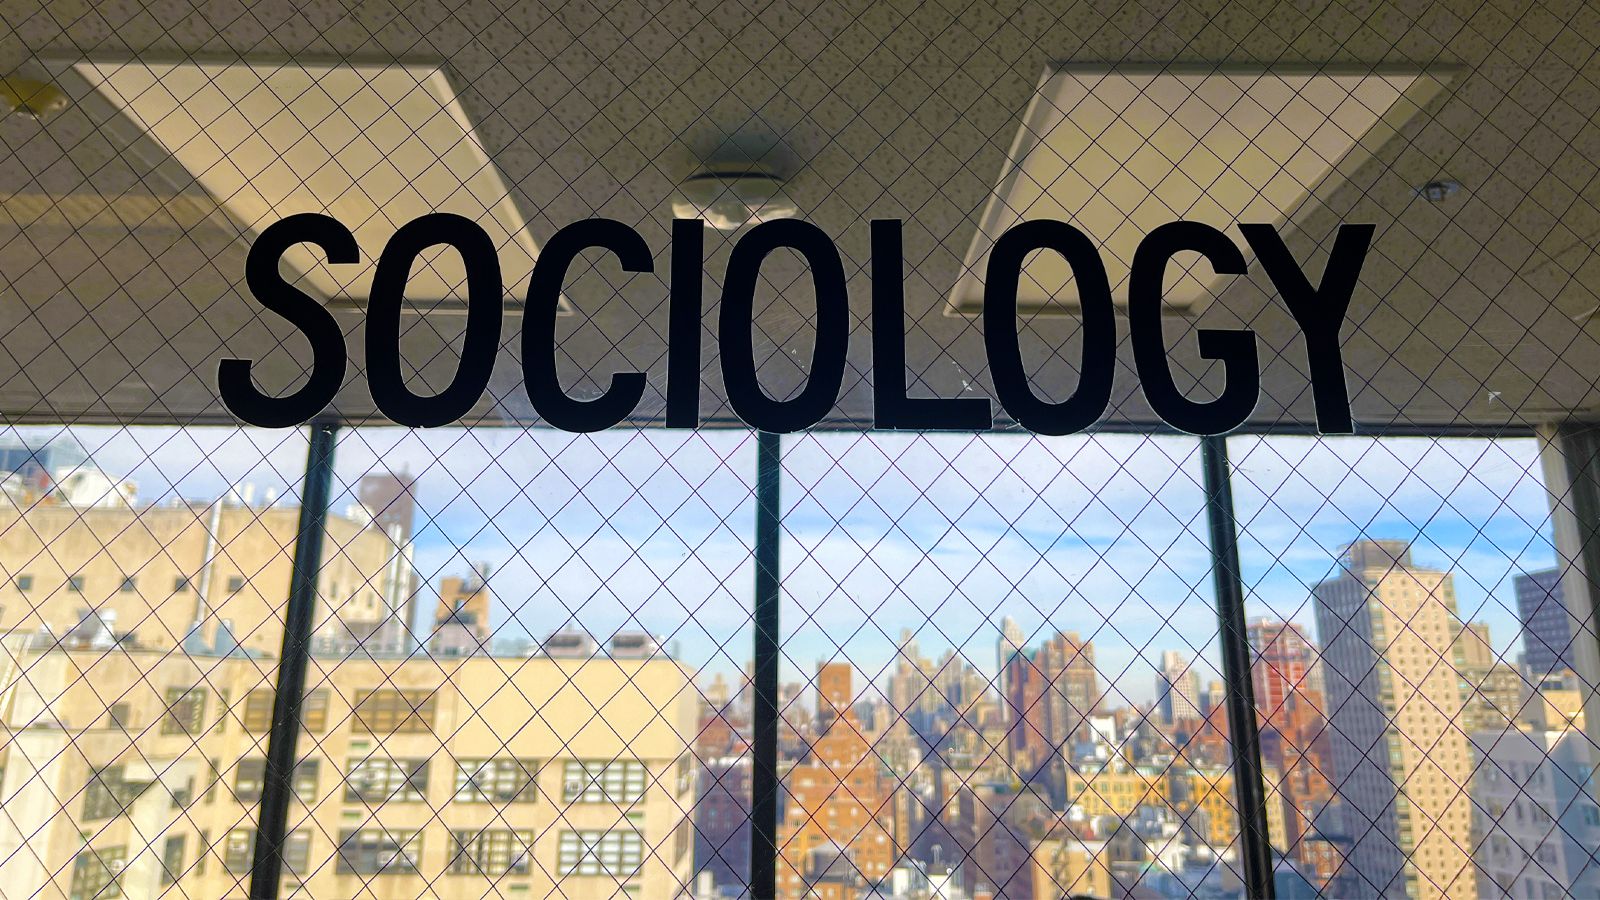 Sociology office